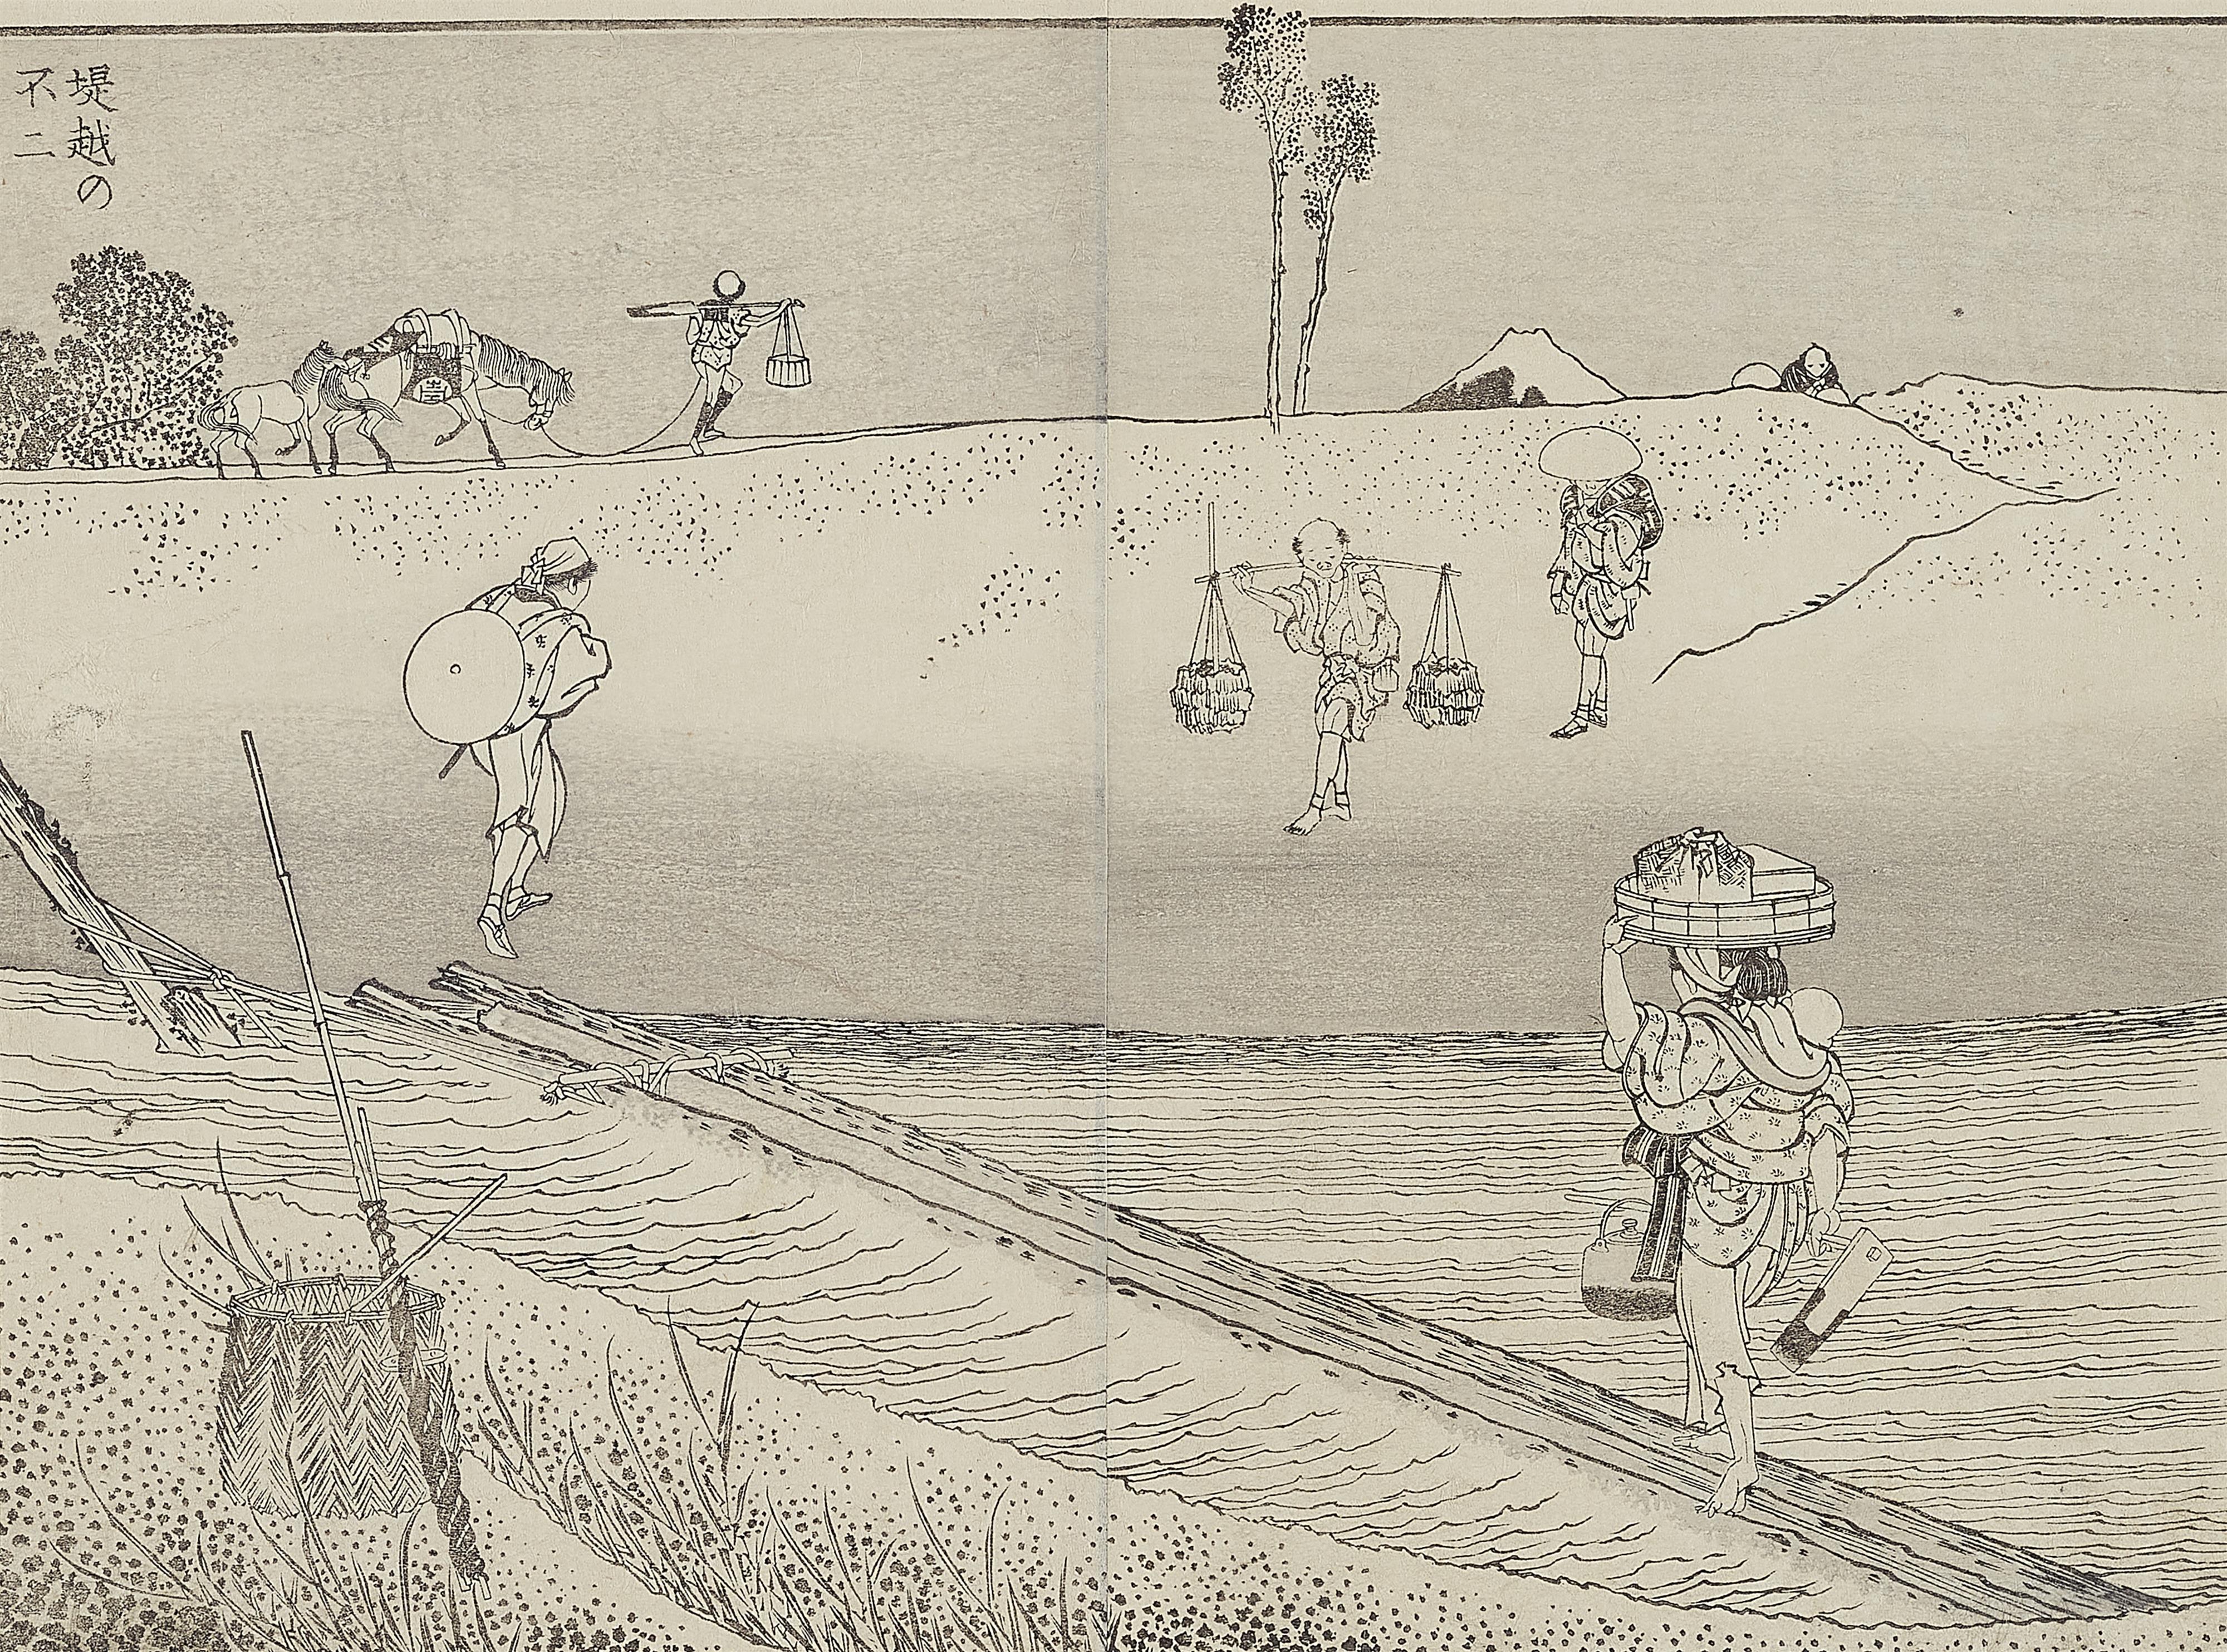 Katsushika Hokusai - Black and white illustrations from the album Fugaku hyakkei - image-12